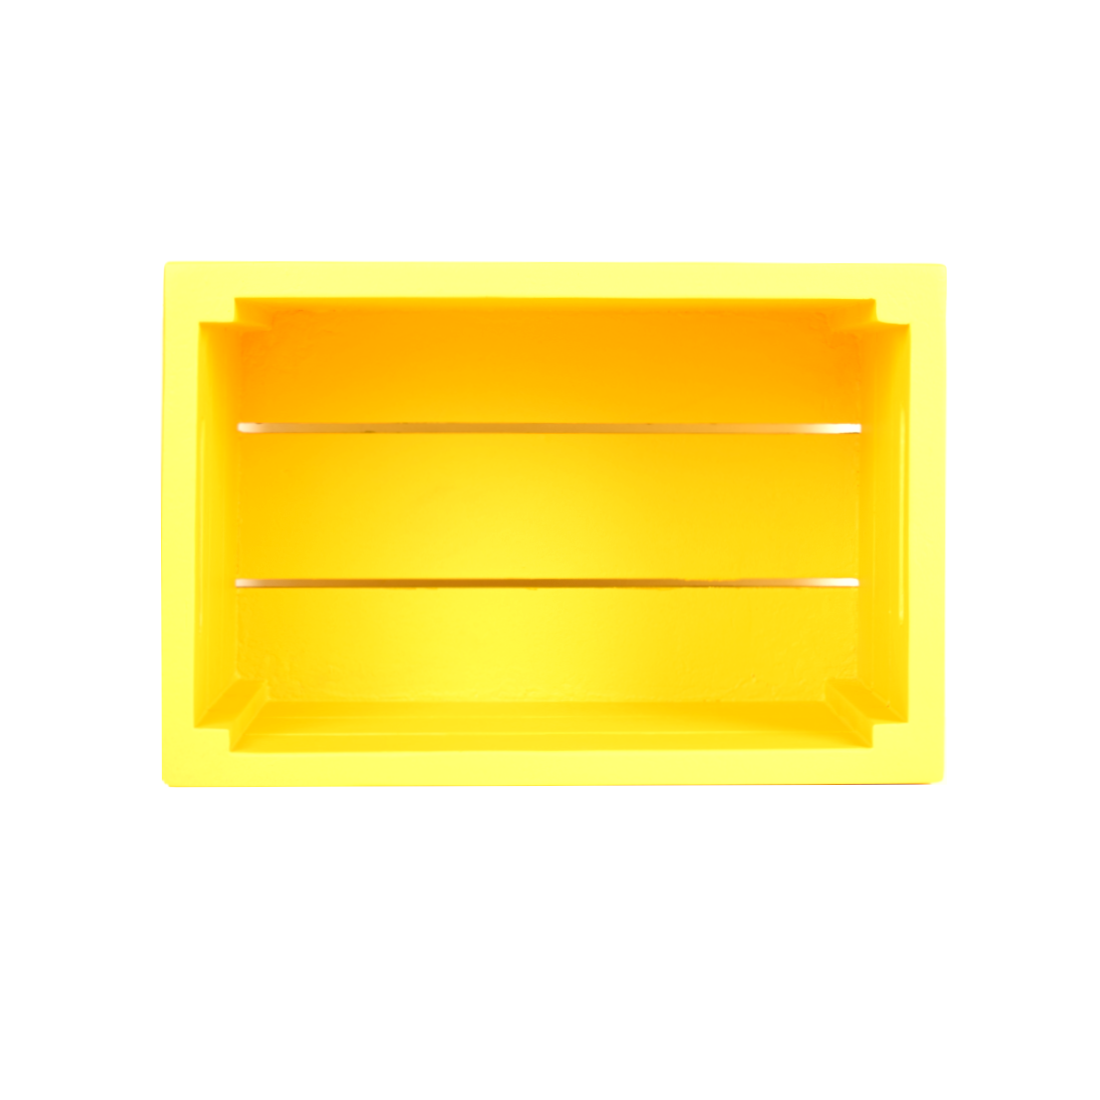 CustHum-Crate-multipurpose pallet crate box (yellow; top view)